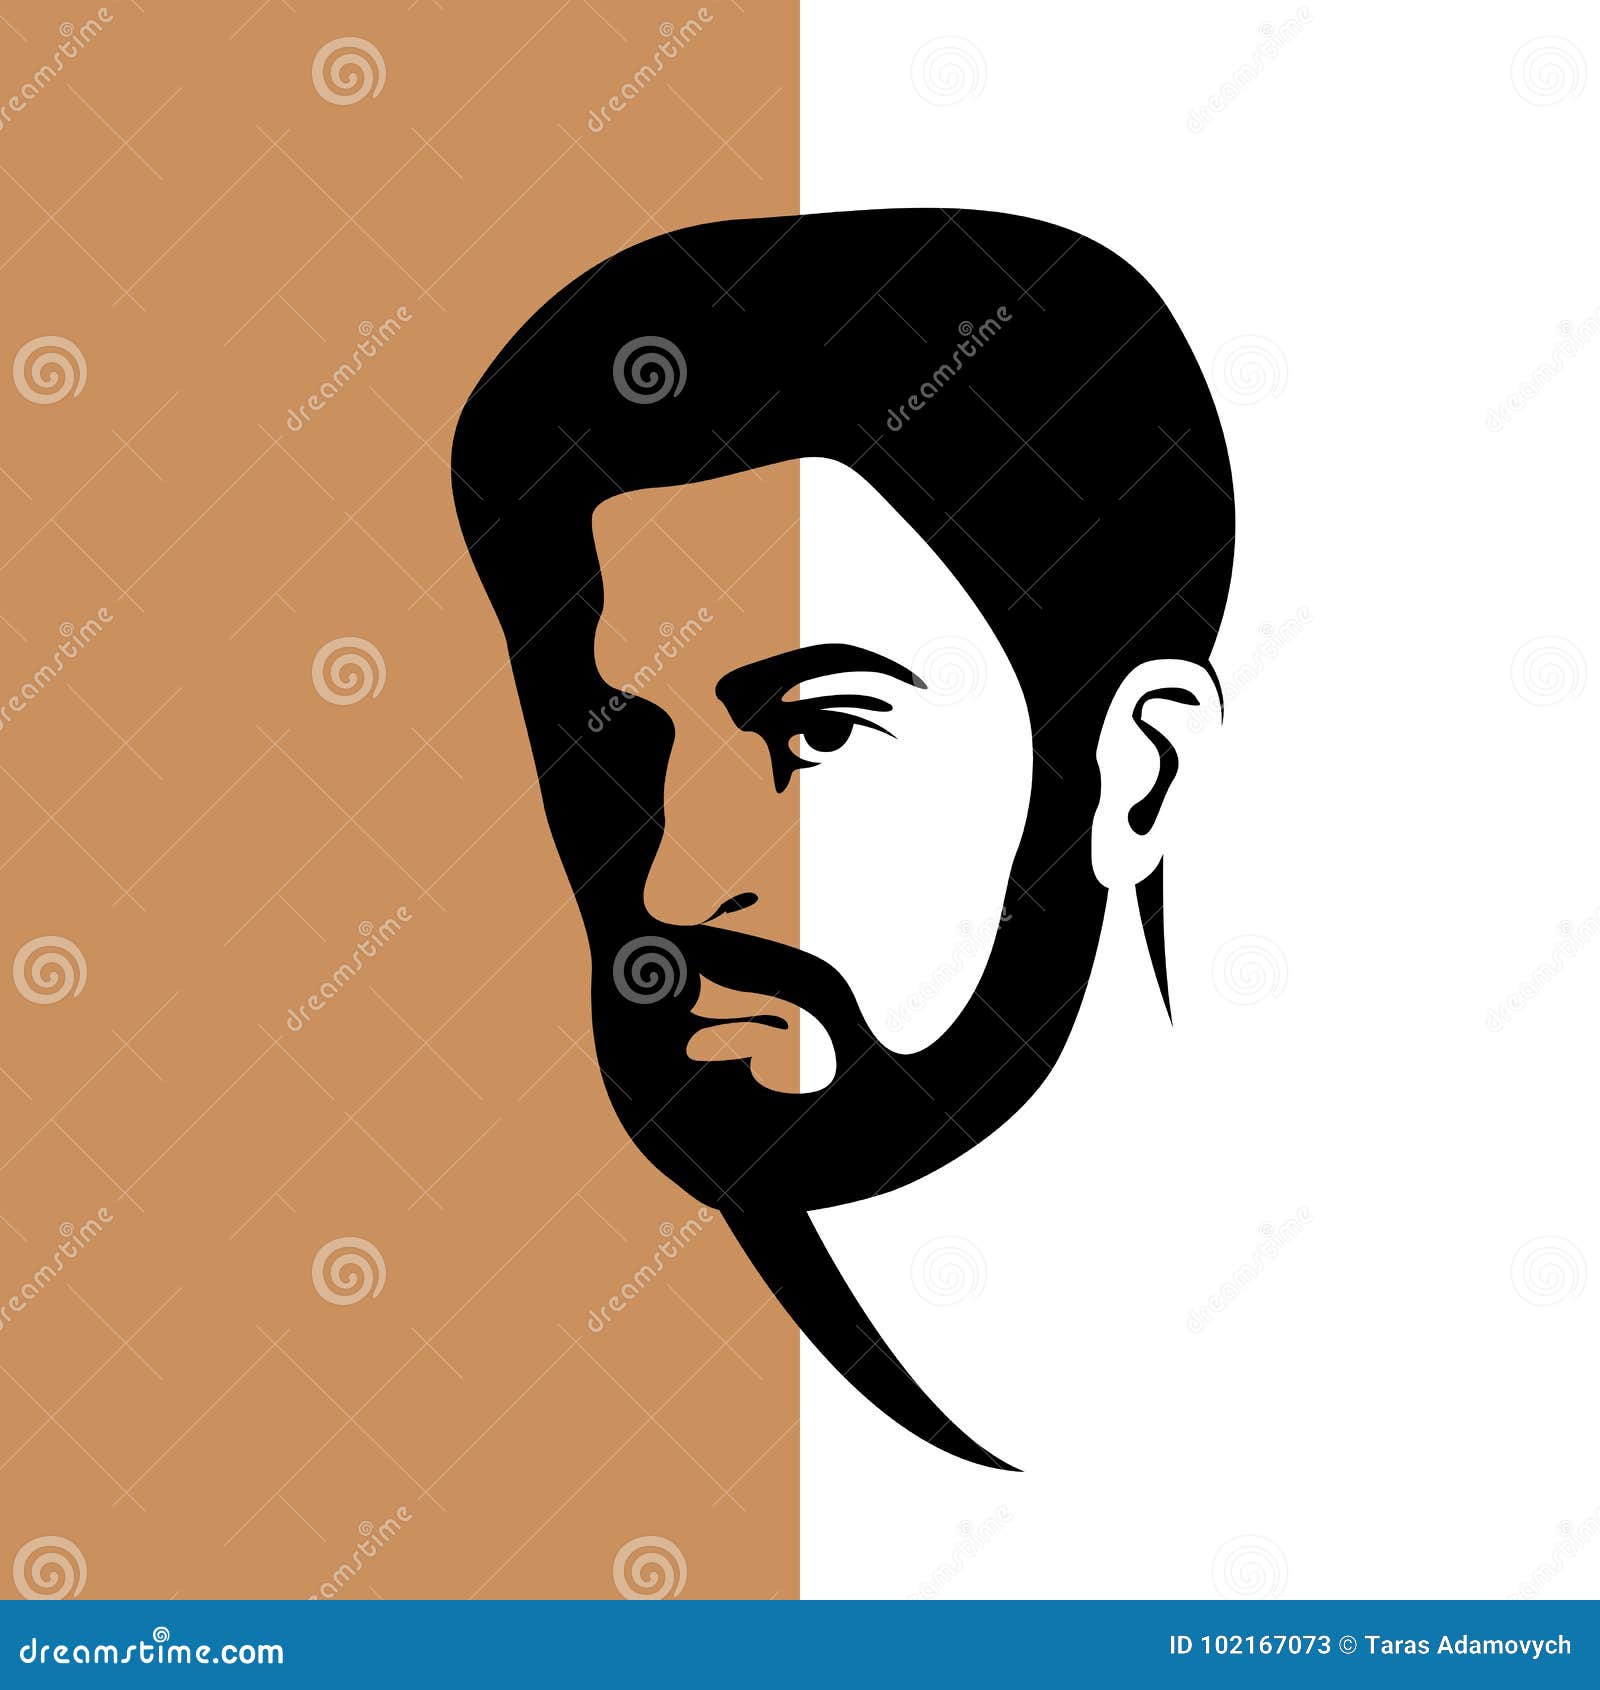 Hipster Men Head Face Vector Illustration Profile Stock